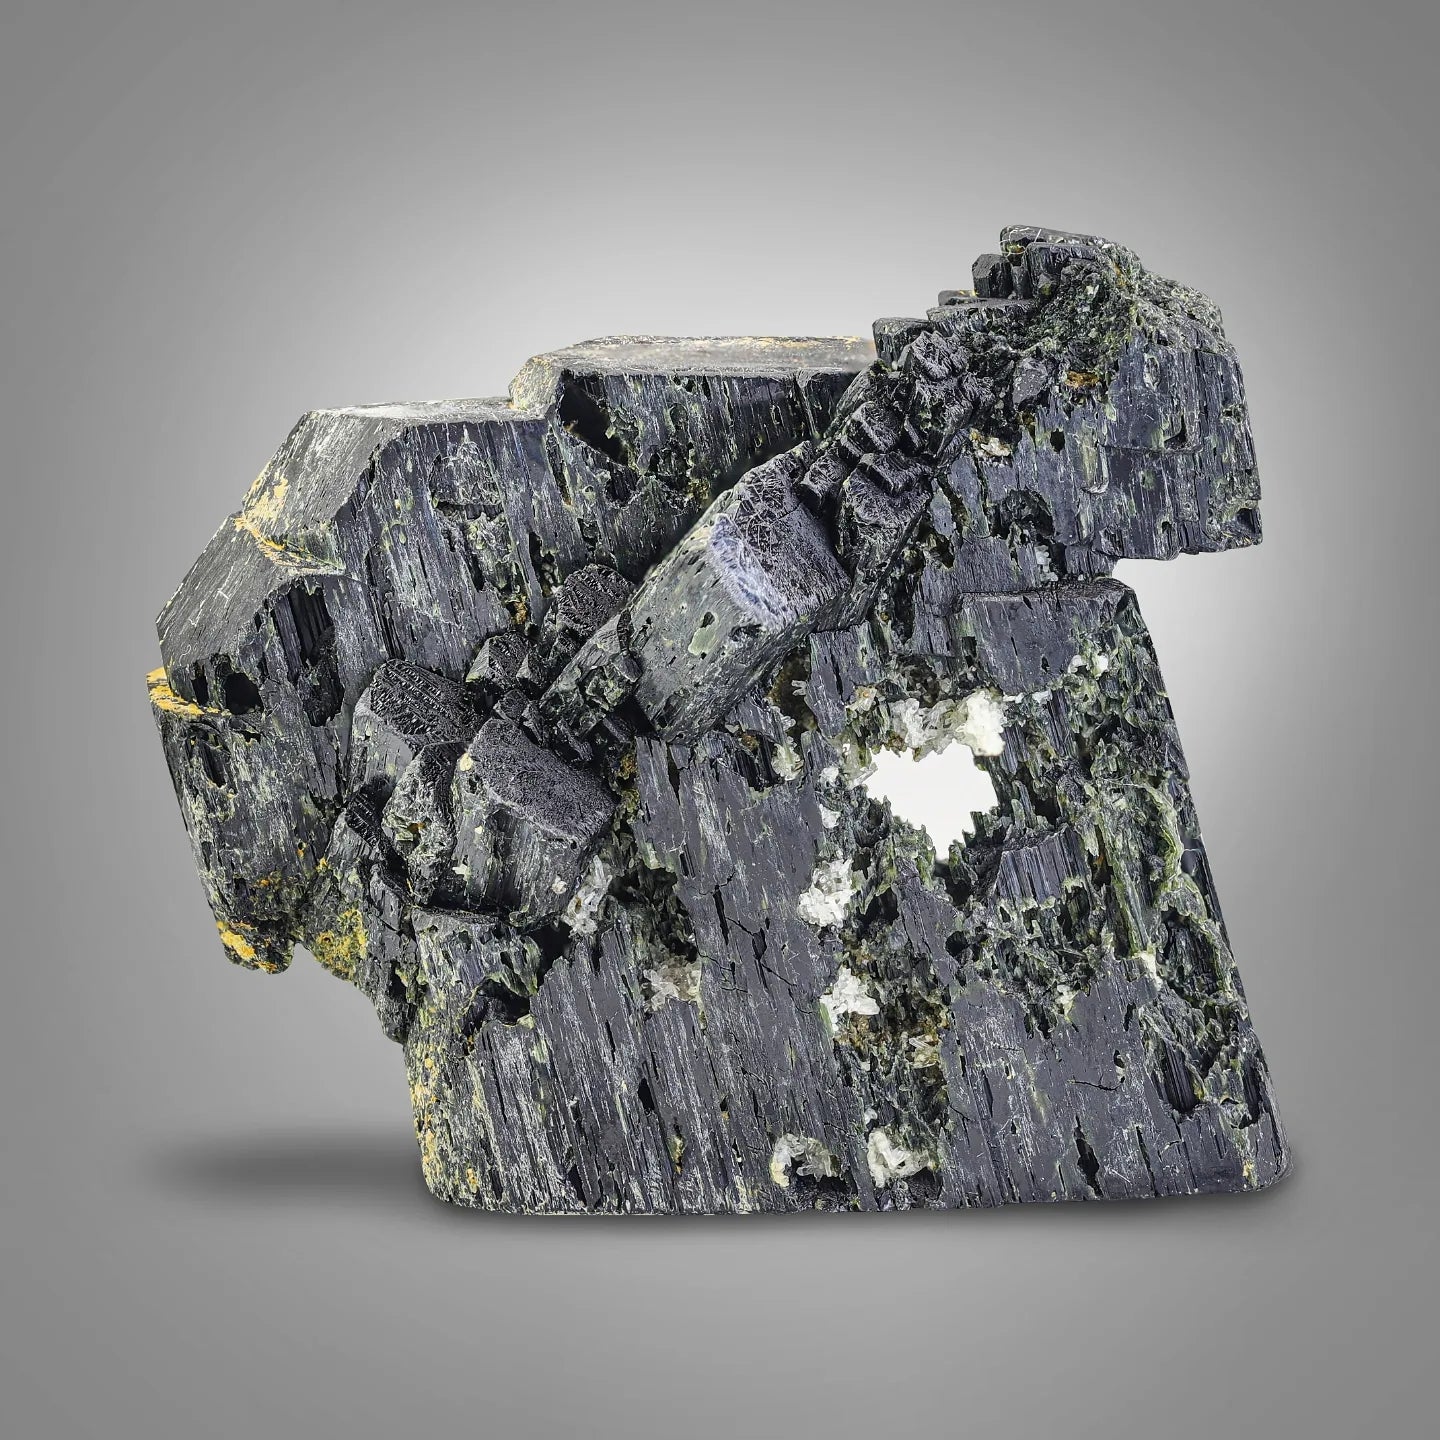 Interesting Crystallography for Rare Aegirine-Augite from Skardu, Pakistan